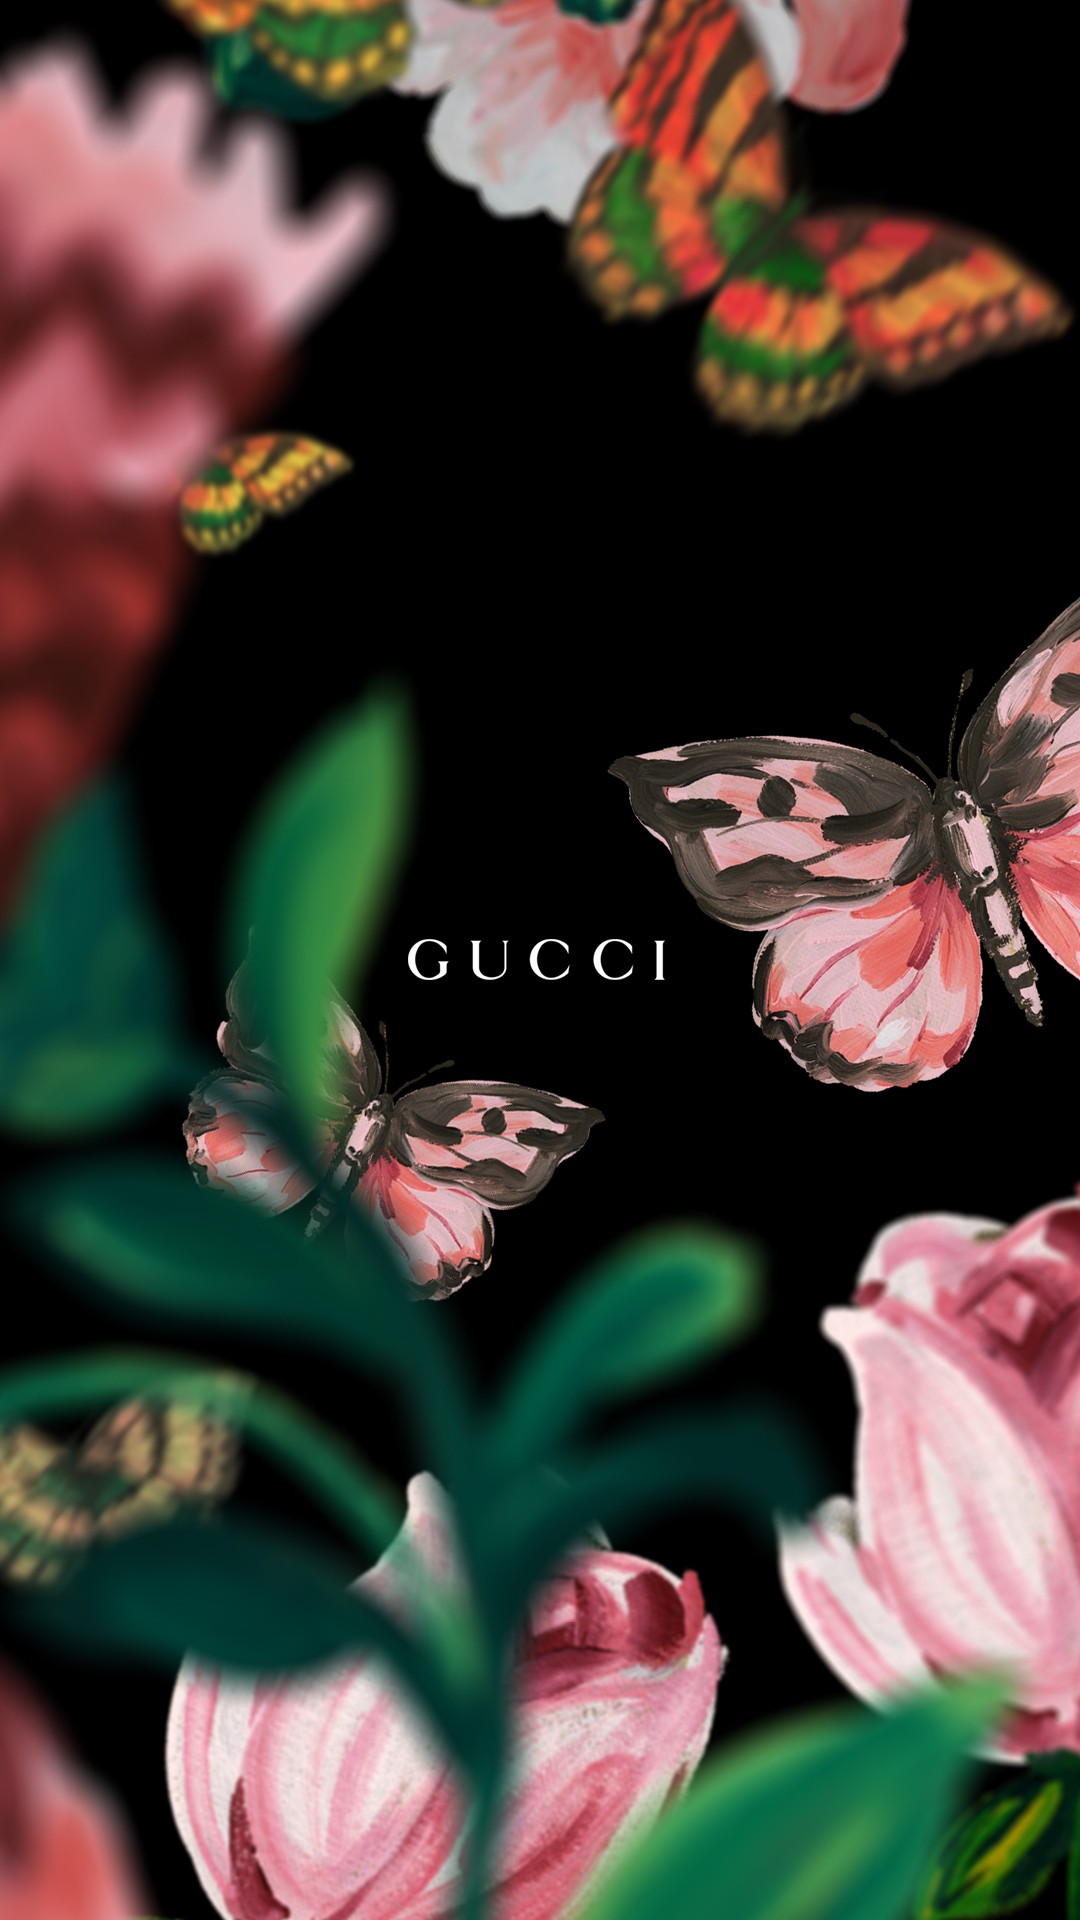 Gucci Snake Dark iPhone Wallpaper - iPhone Wallpapers